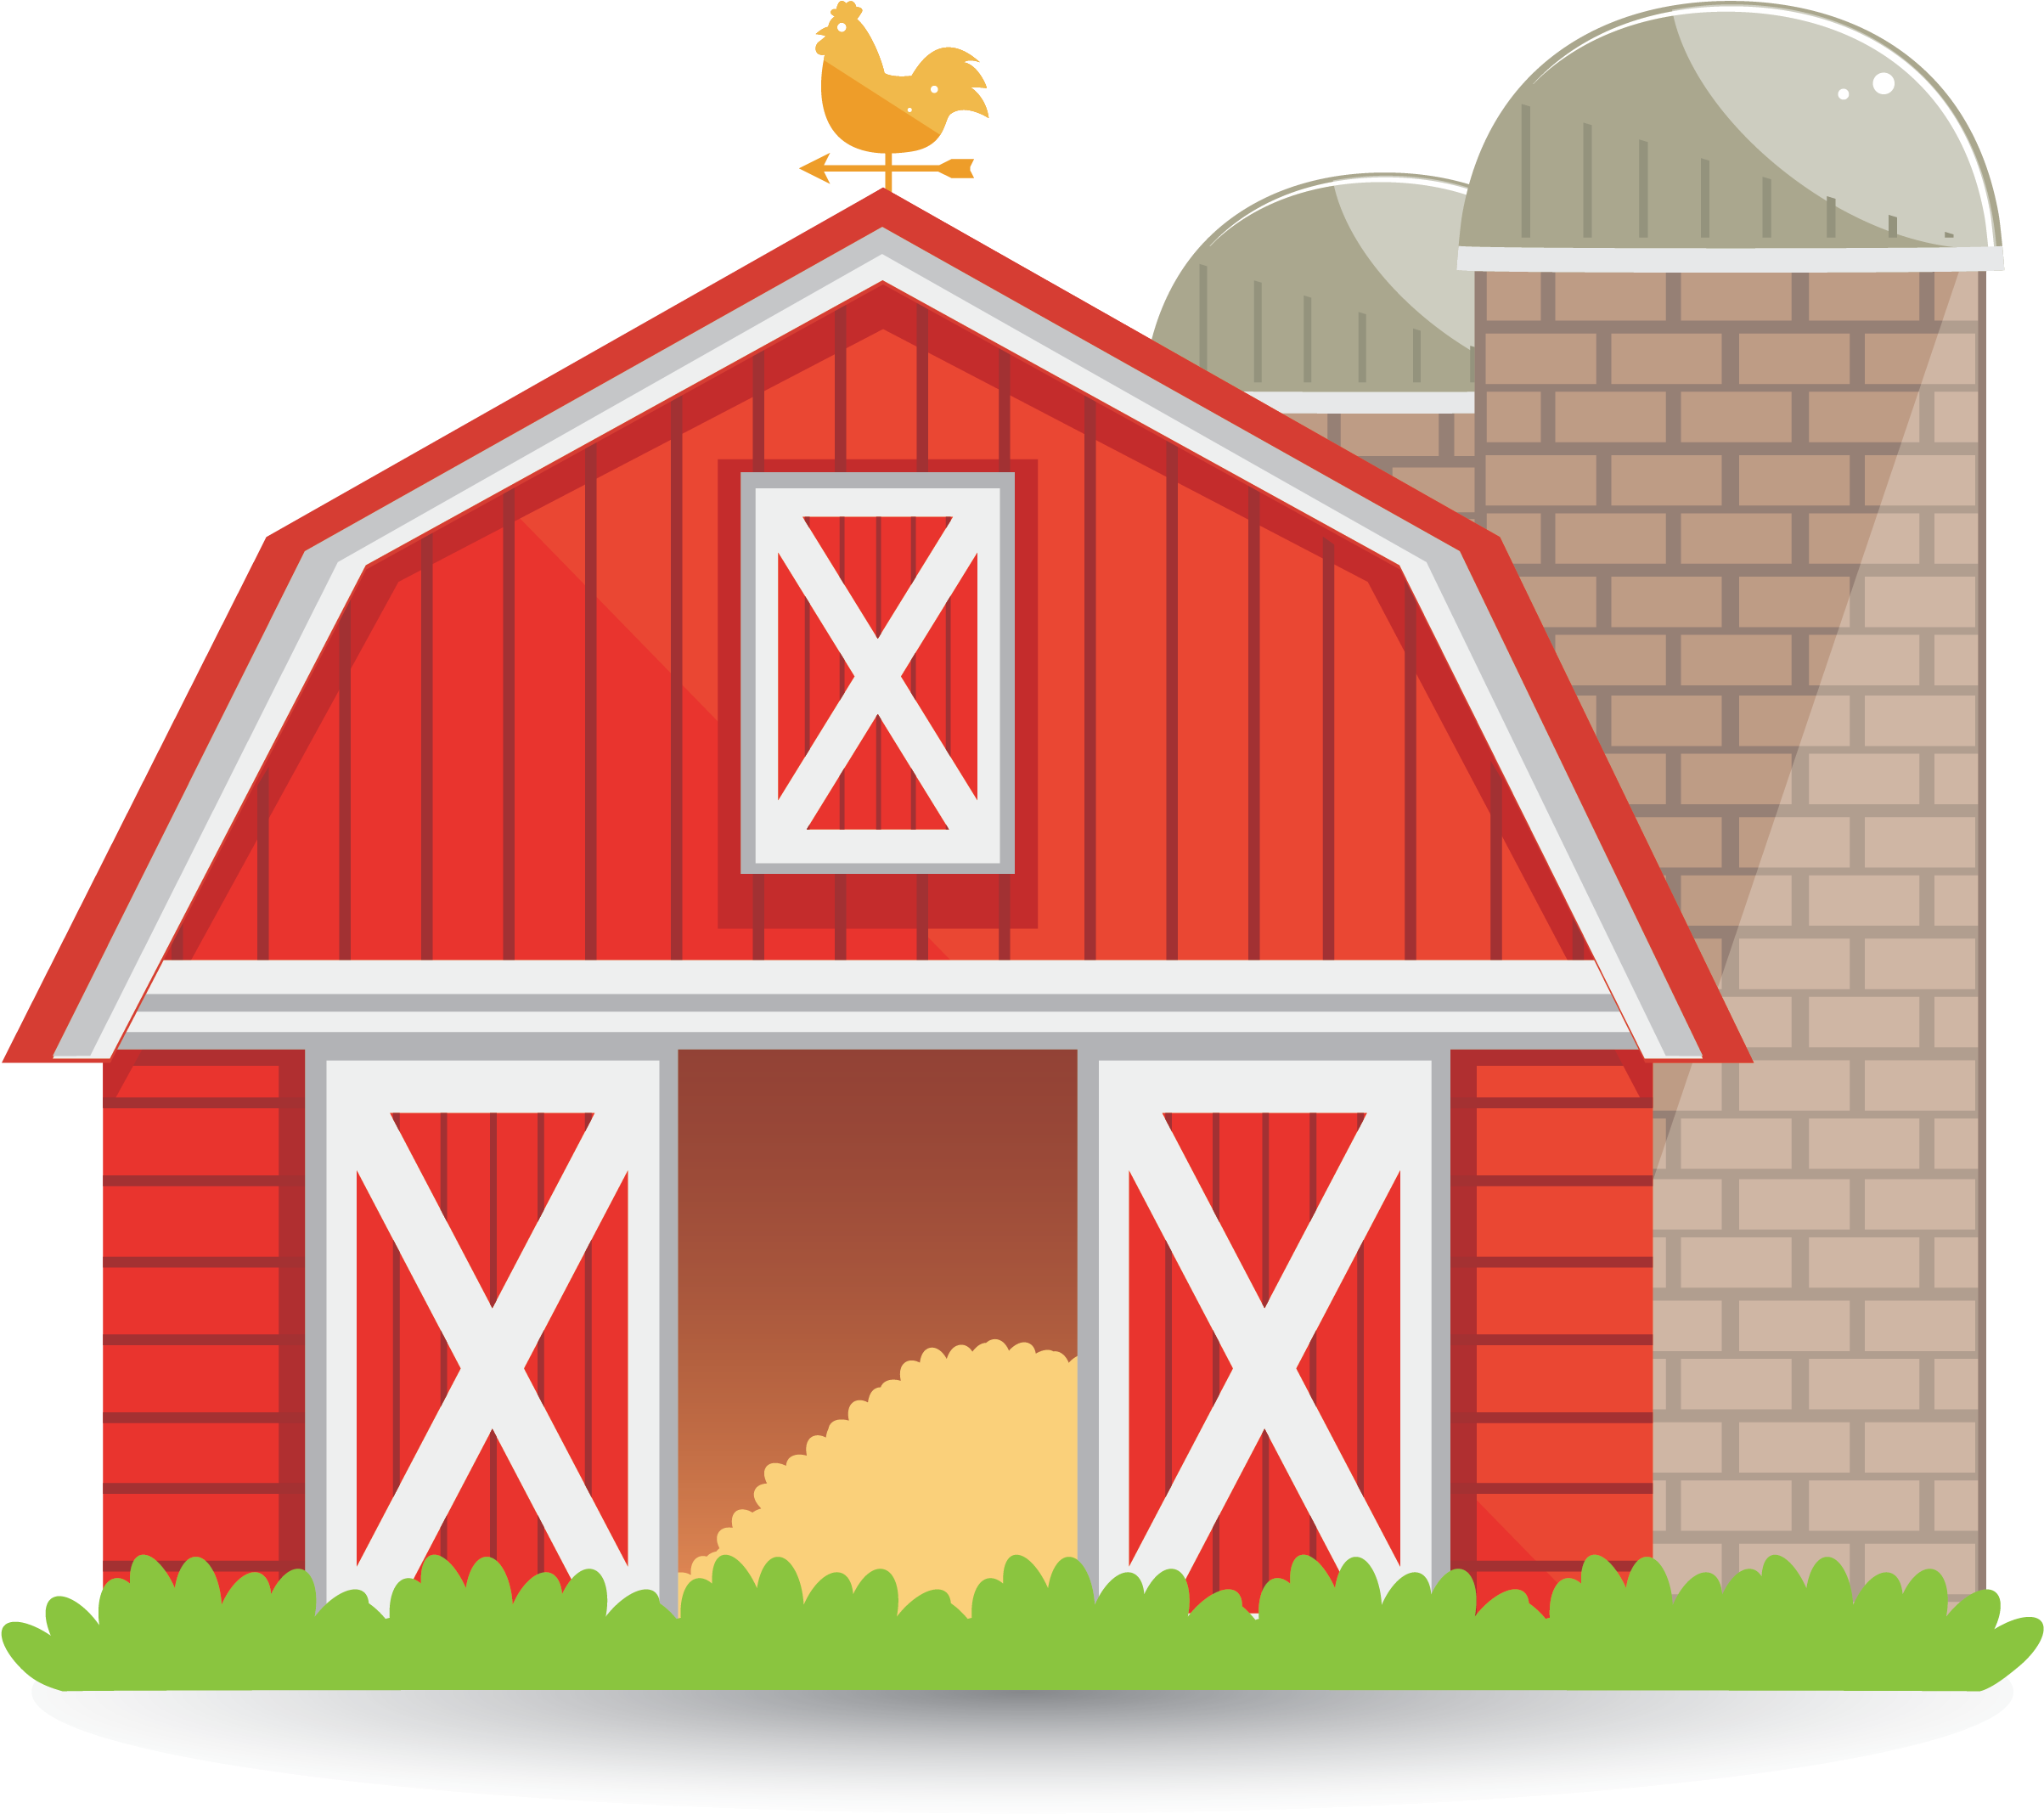 Farm Business Plan Barn - Business Plan (2480x2480)